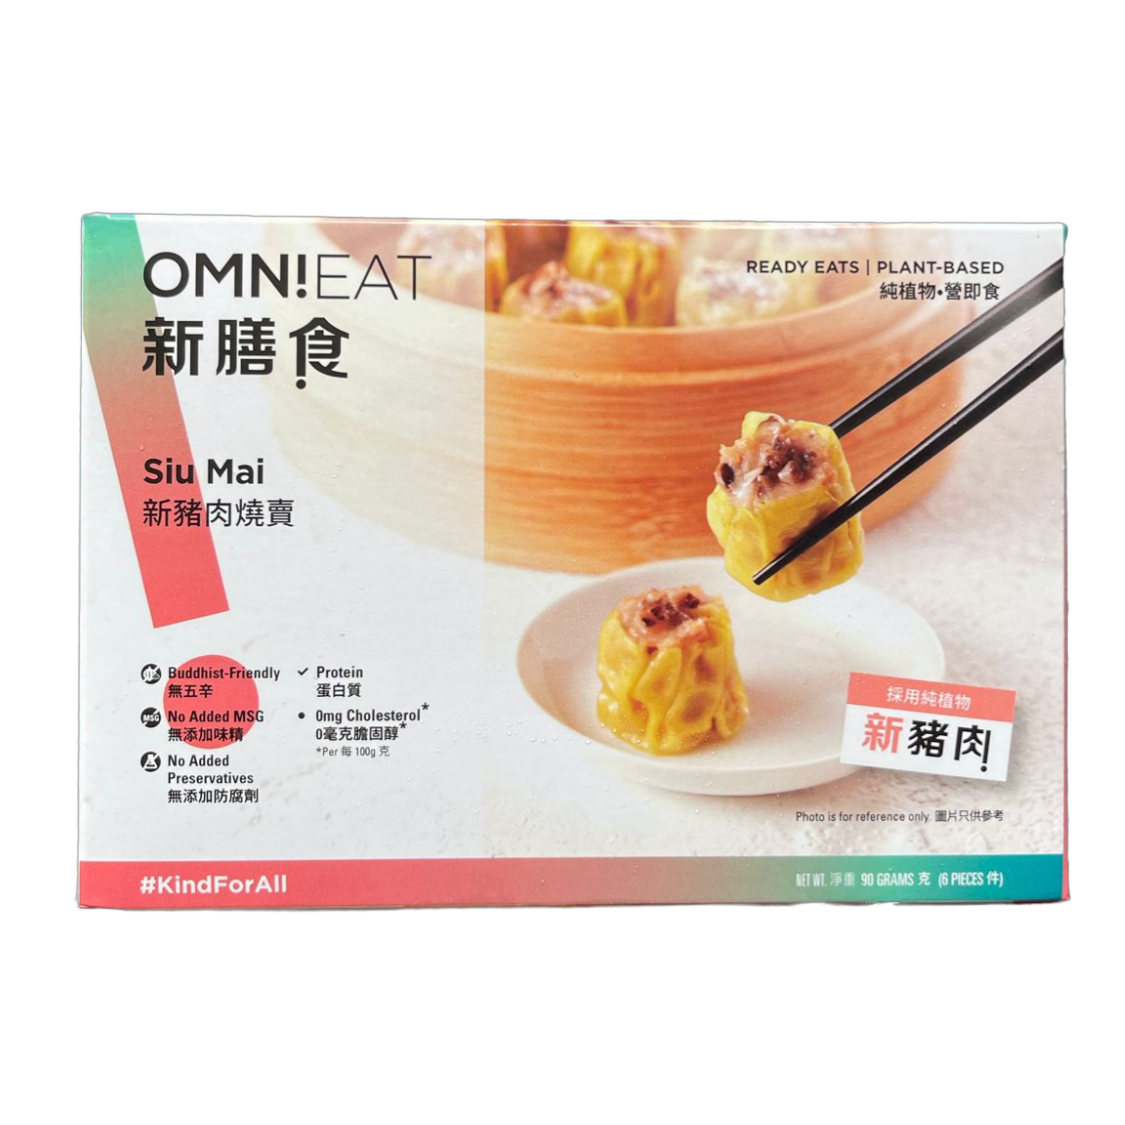 Image OmniEAT Siui Mai 新猪肉-烧卖 90grams